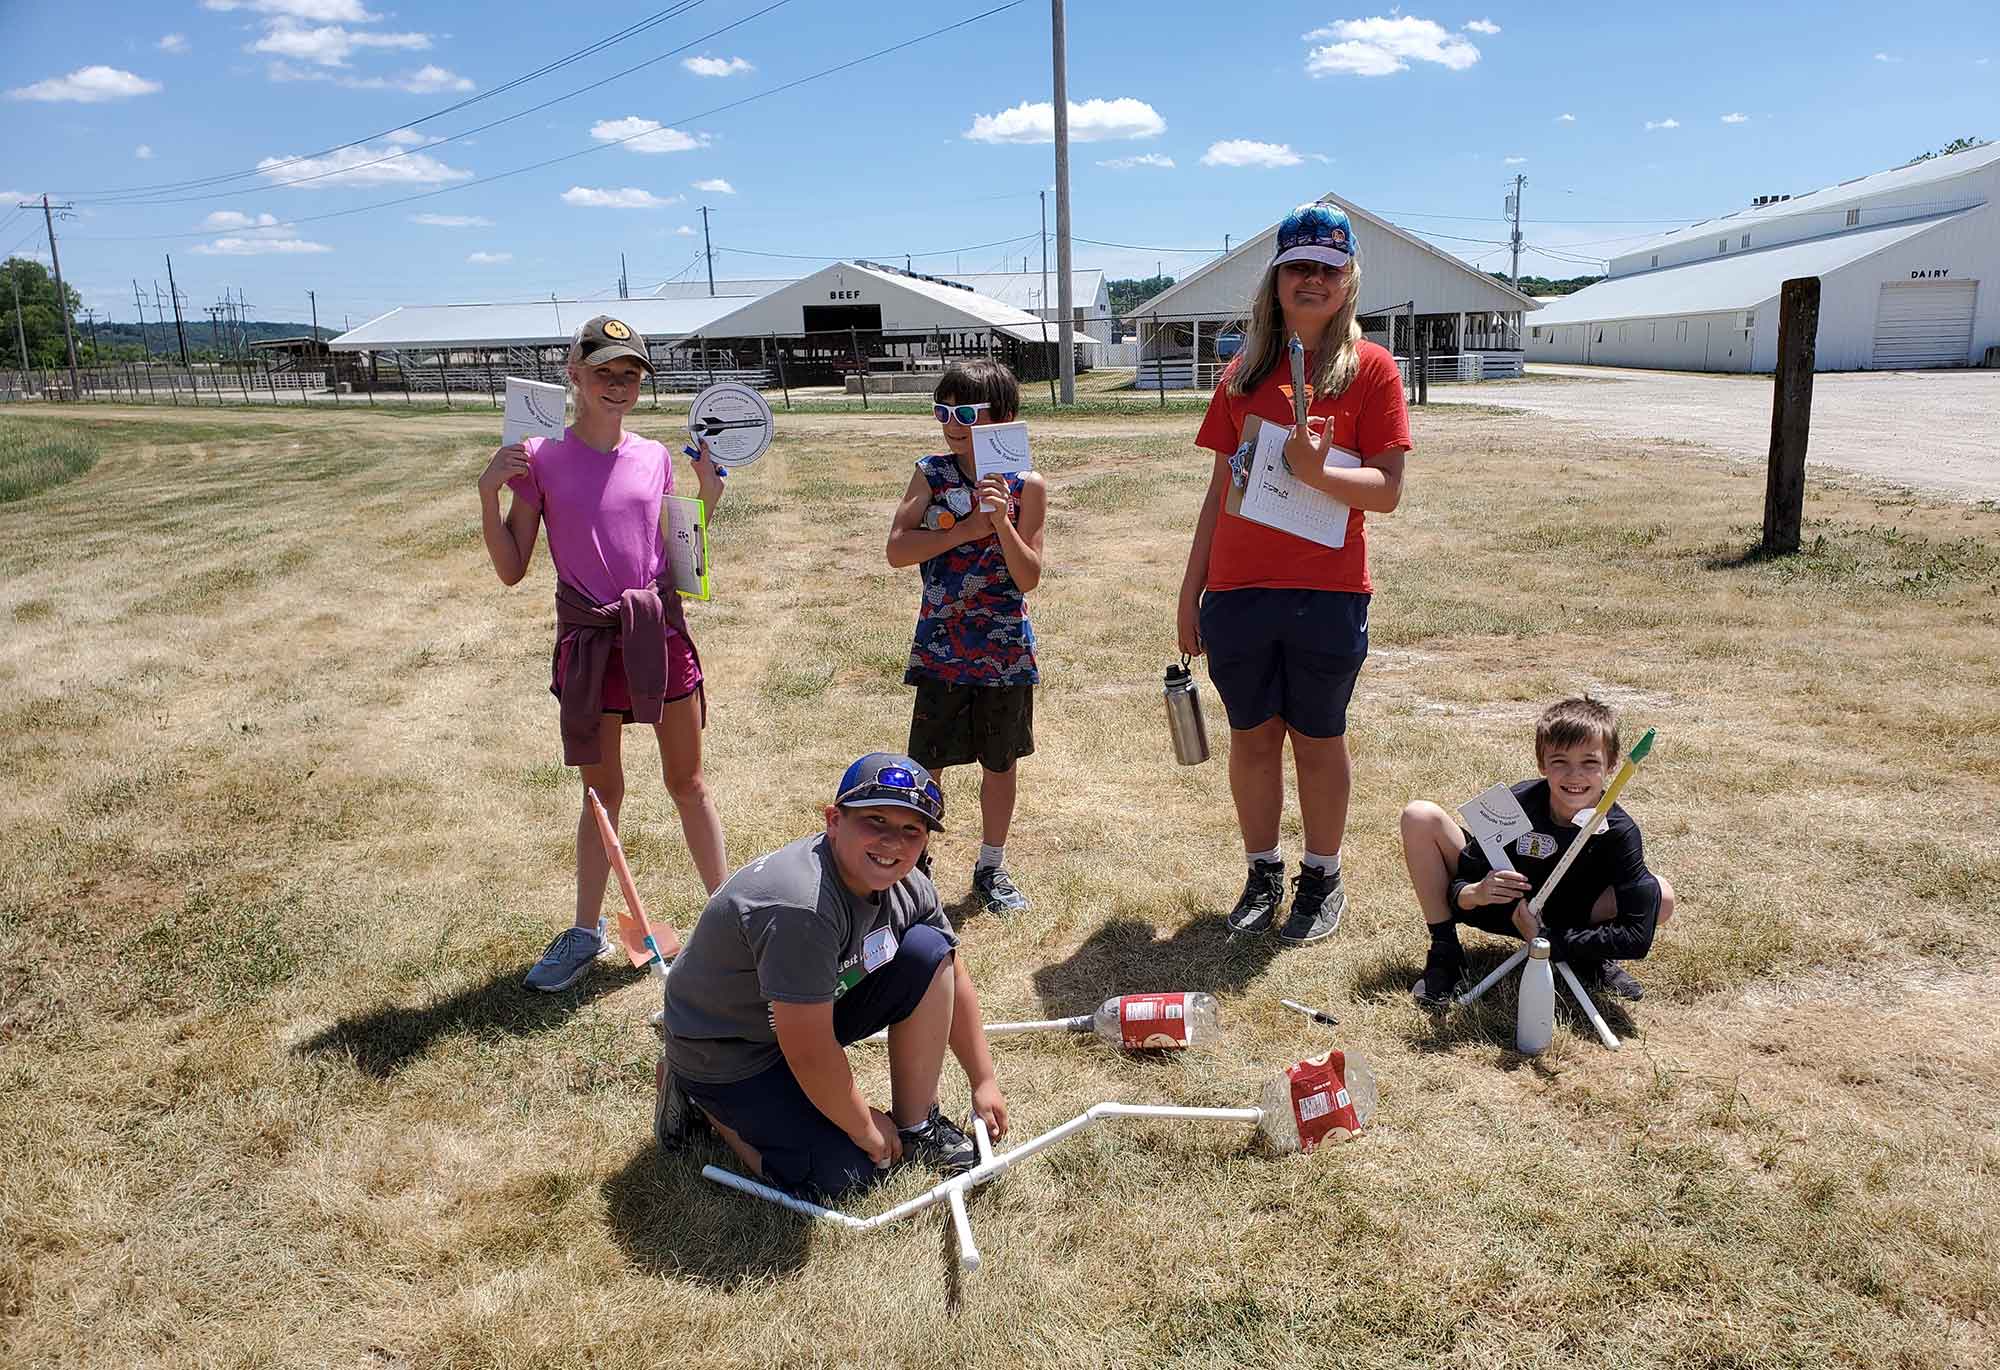 4H NASA Astro Camp events inspire Iowa youth AGDAILY